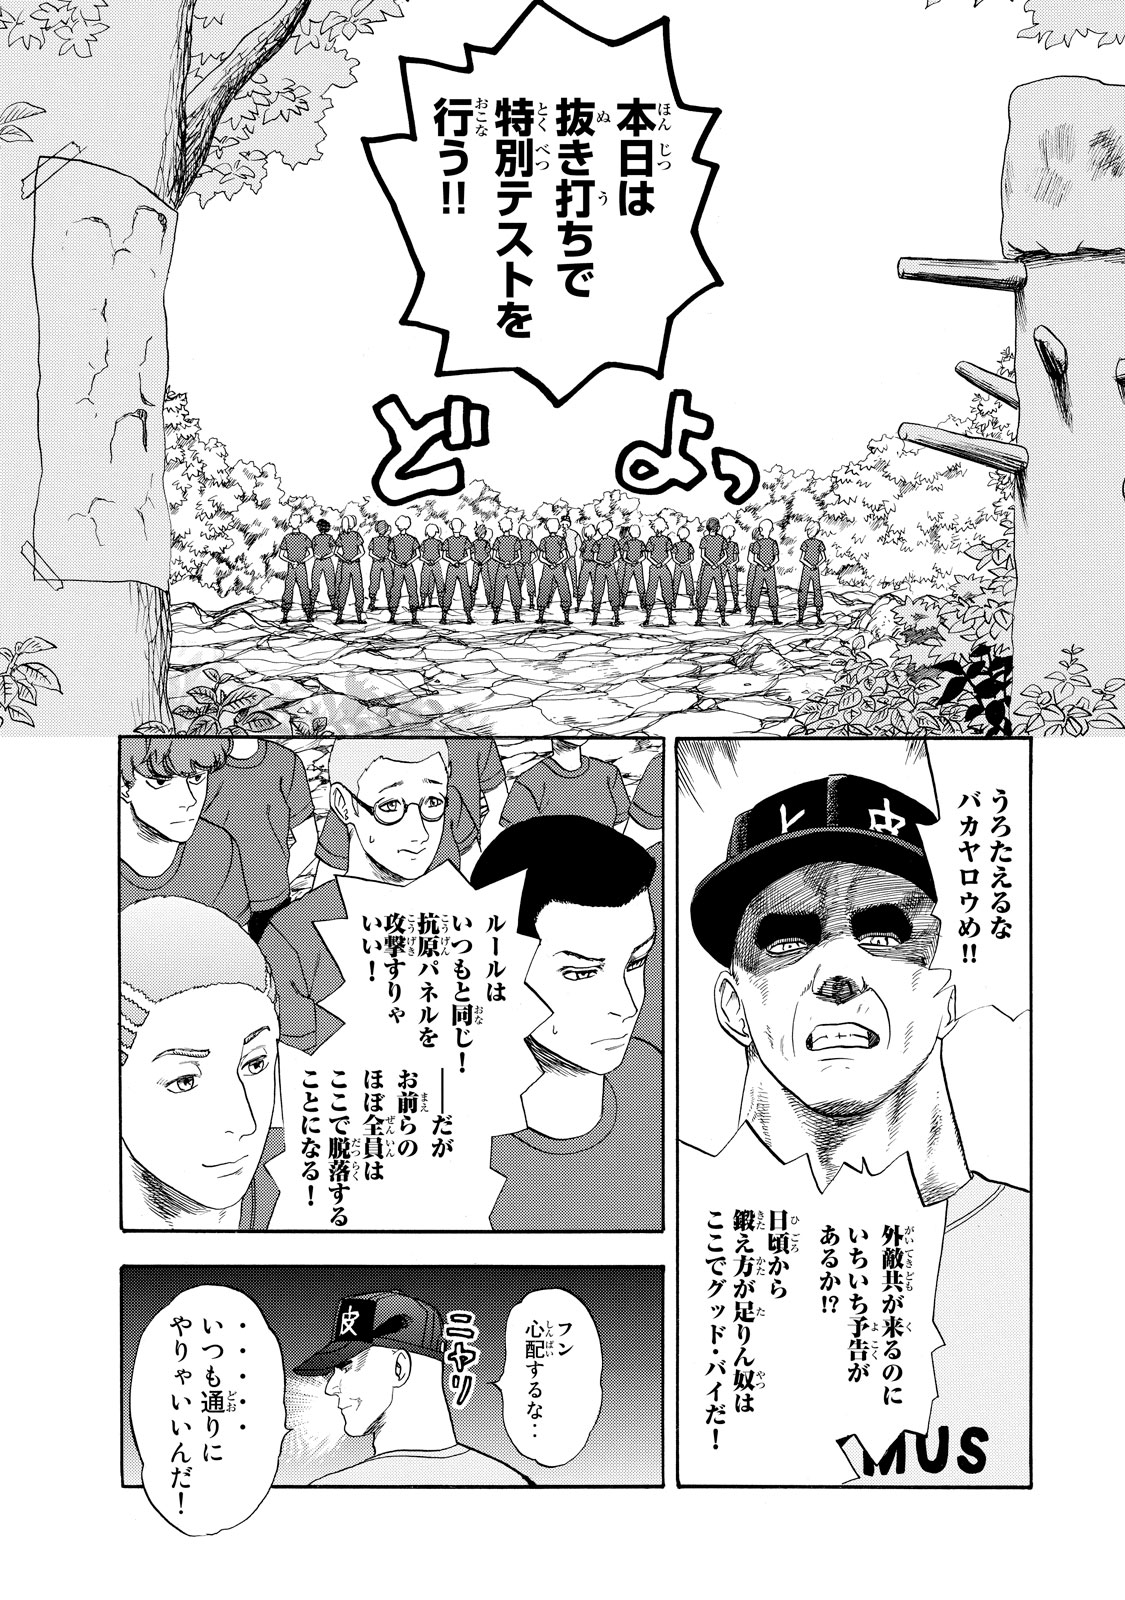 Hataraku Saibou - Chapter 12 - Page 19